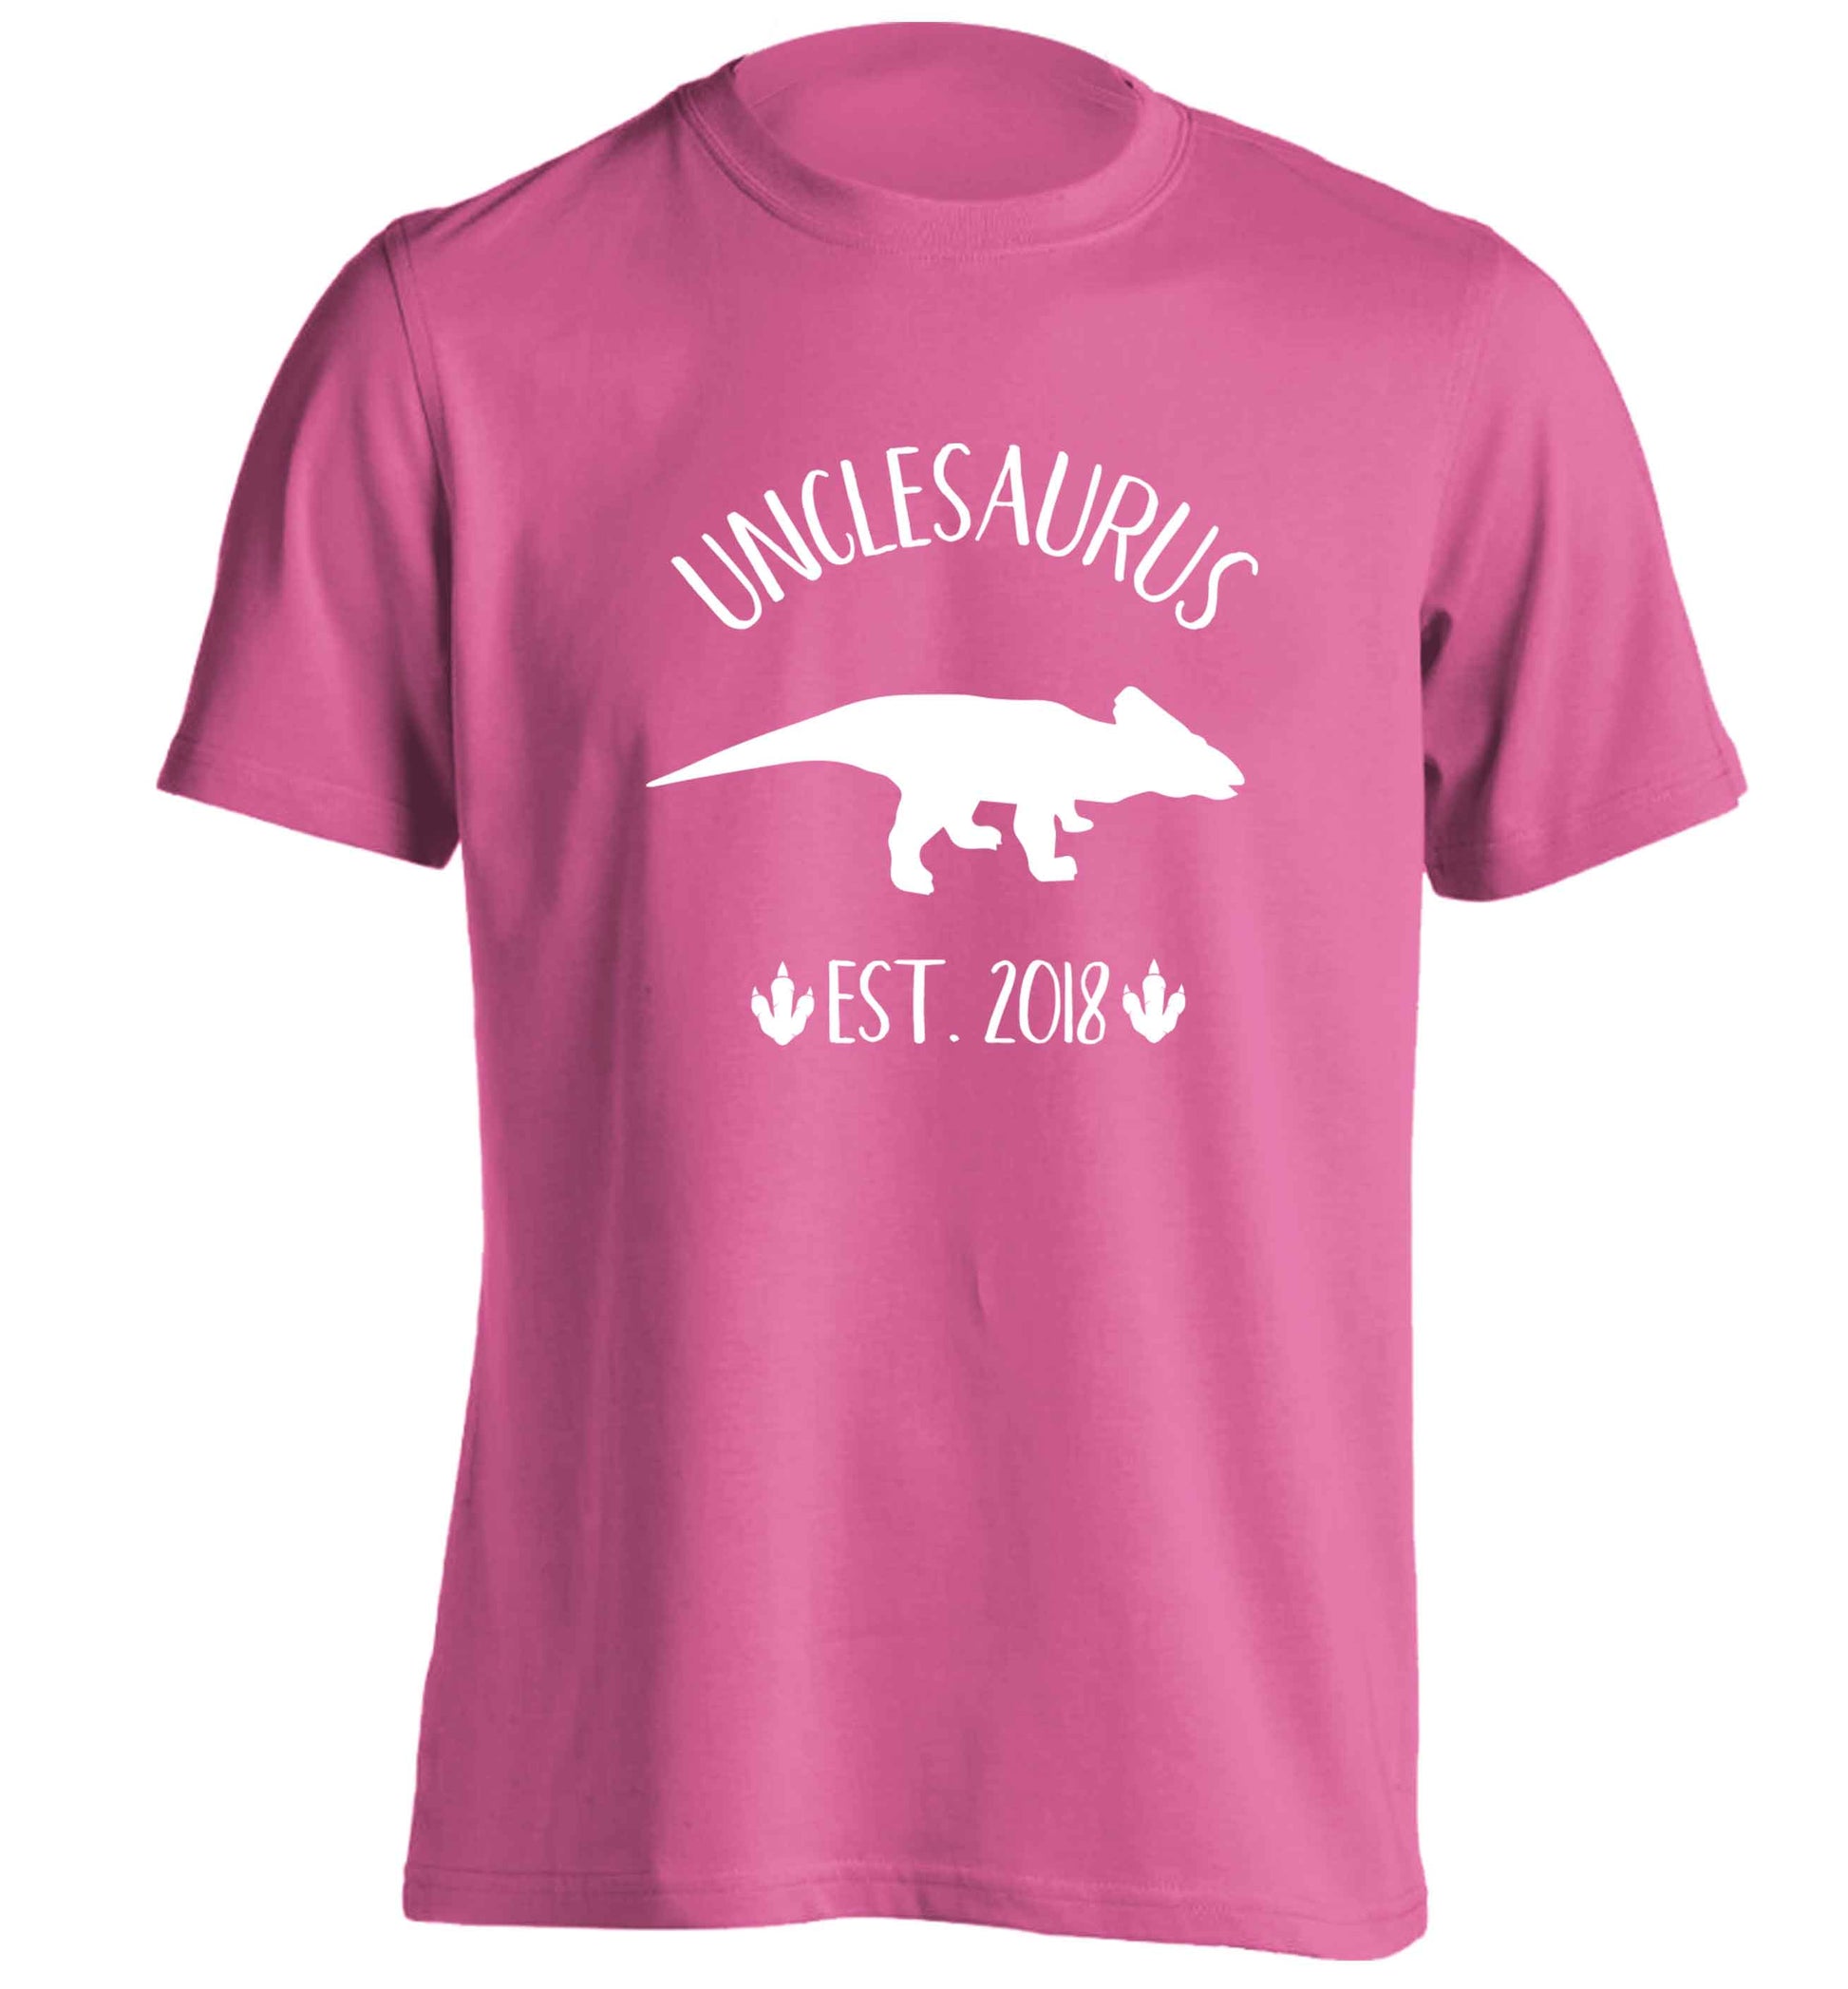 Personalised unclesaurus since (custom date) adults unisex pink Tshirt 2XL